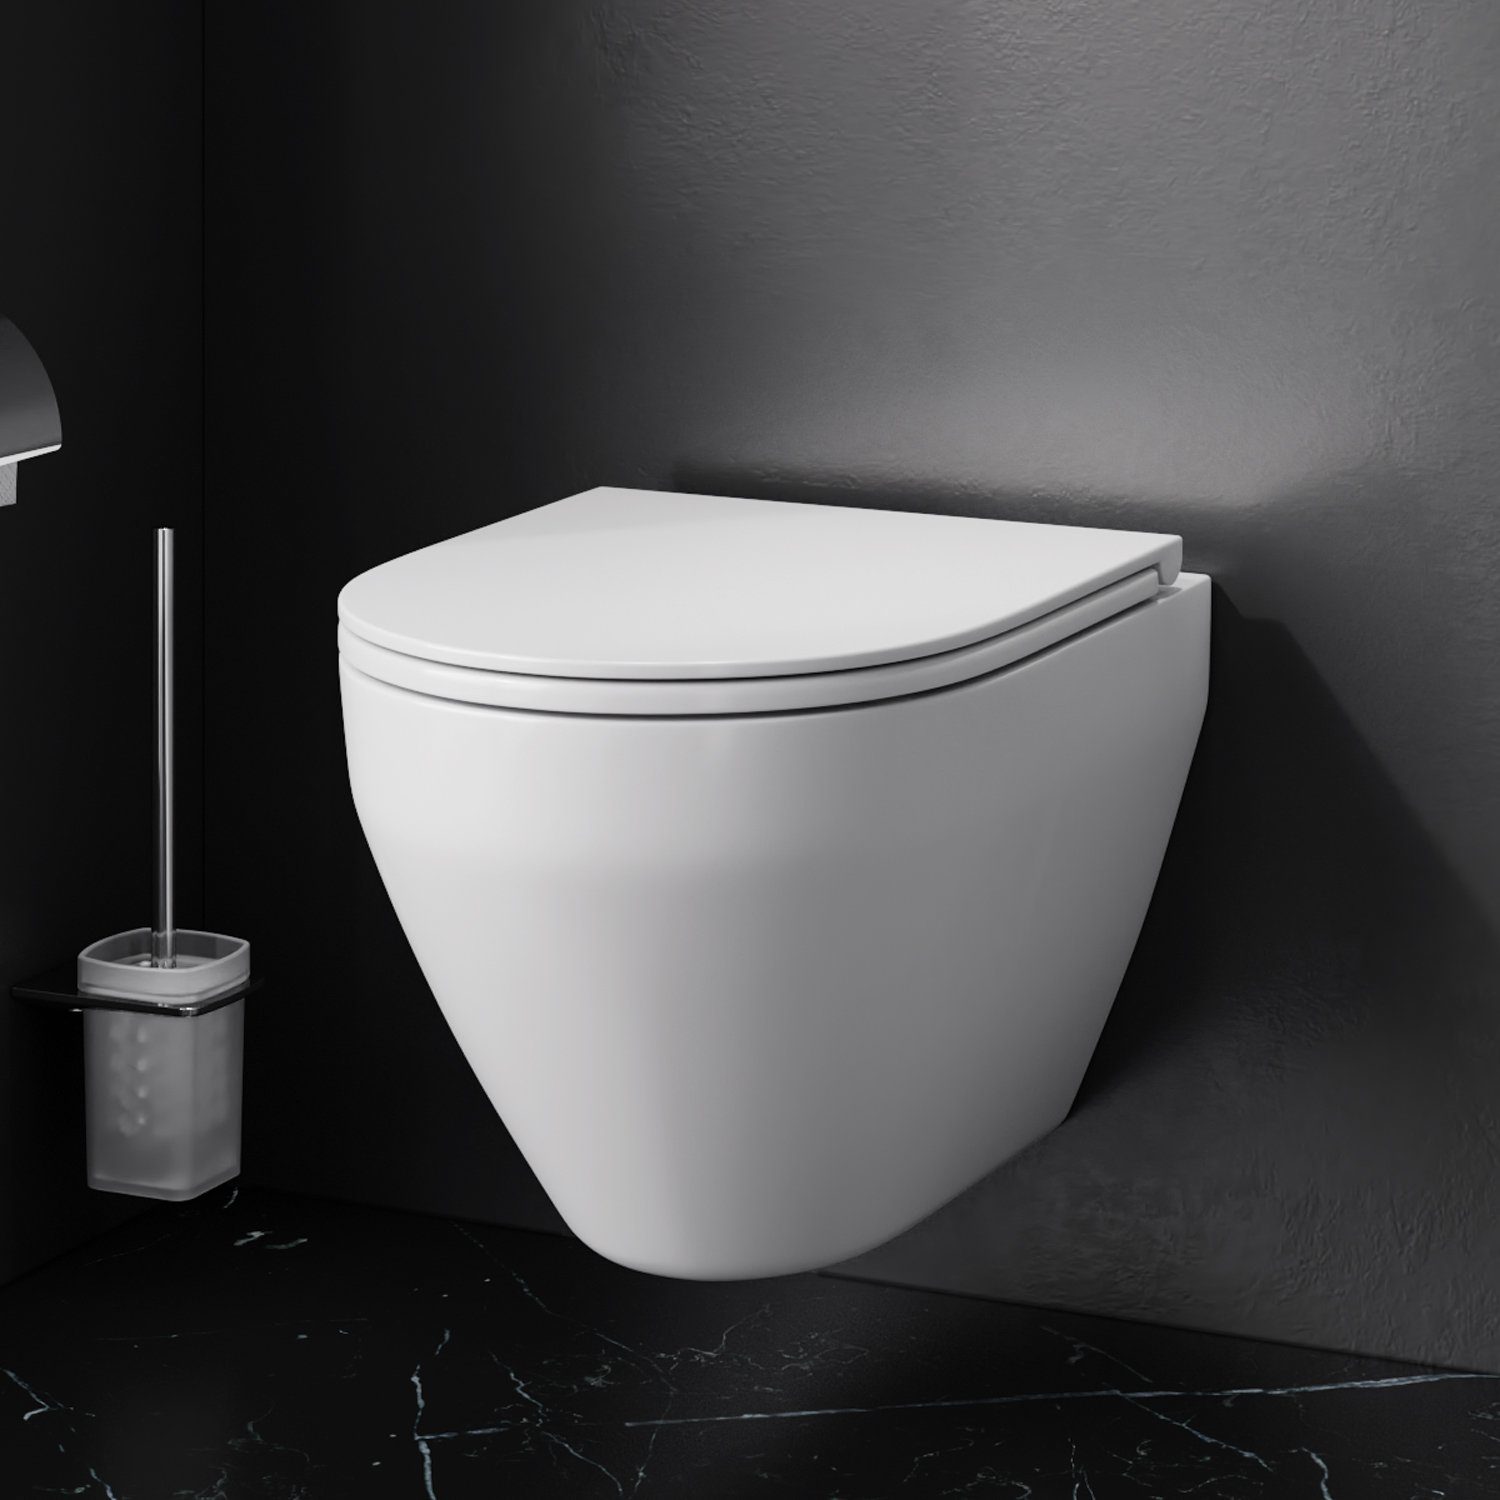 AM.PM Tiefspül-WC Wand WC Spirit V2.0 Hänge WC Spülrandloses Toilette, Tiefspüler, wandhängend, Abgang waagerecht, Schnellverschluss-Sitz mit Soft-Close-Funktion, Flash Clean